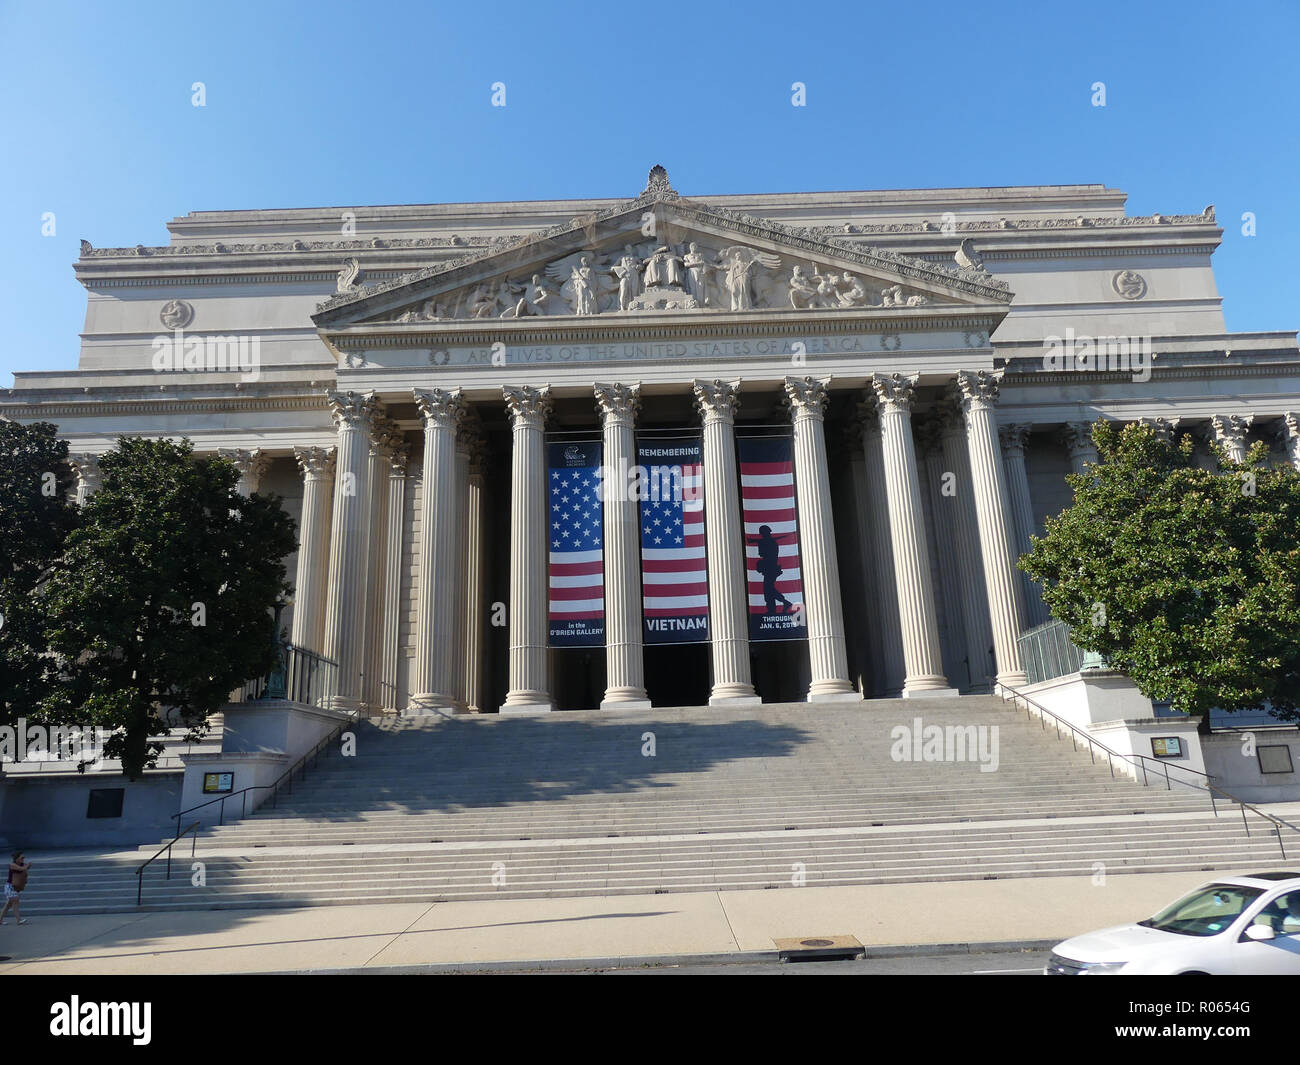 NATIONAL ARCHIVES BUILDING  The Rotunda entrance on Constitution Avenue, Washington D.C. Photo: Tony Gale Stock Photo